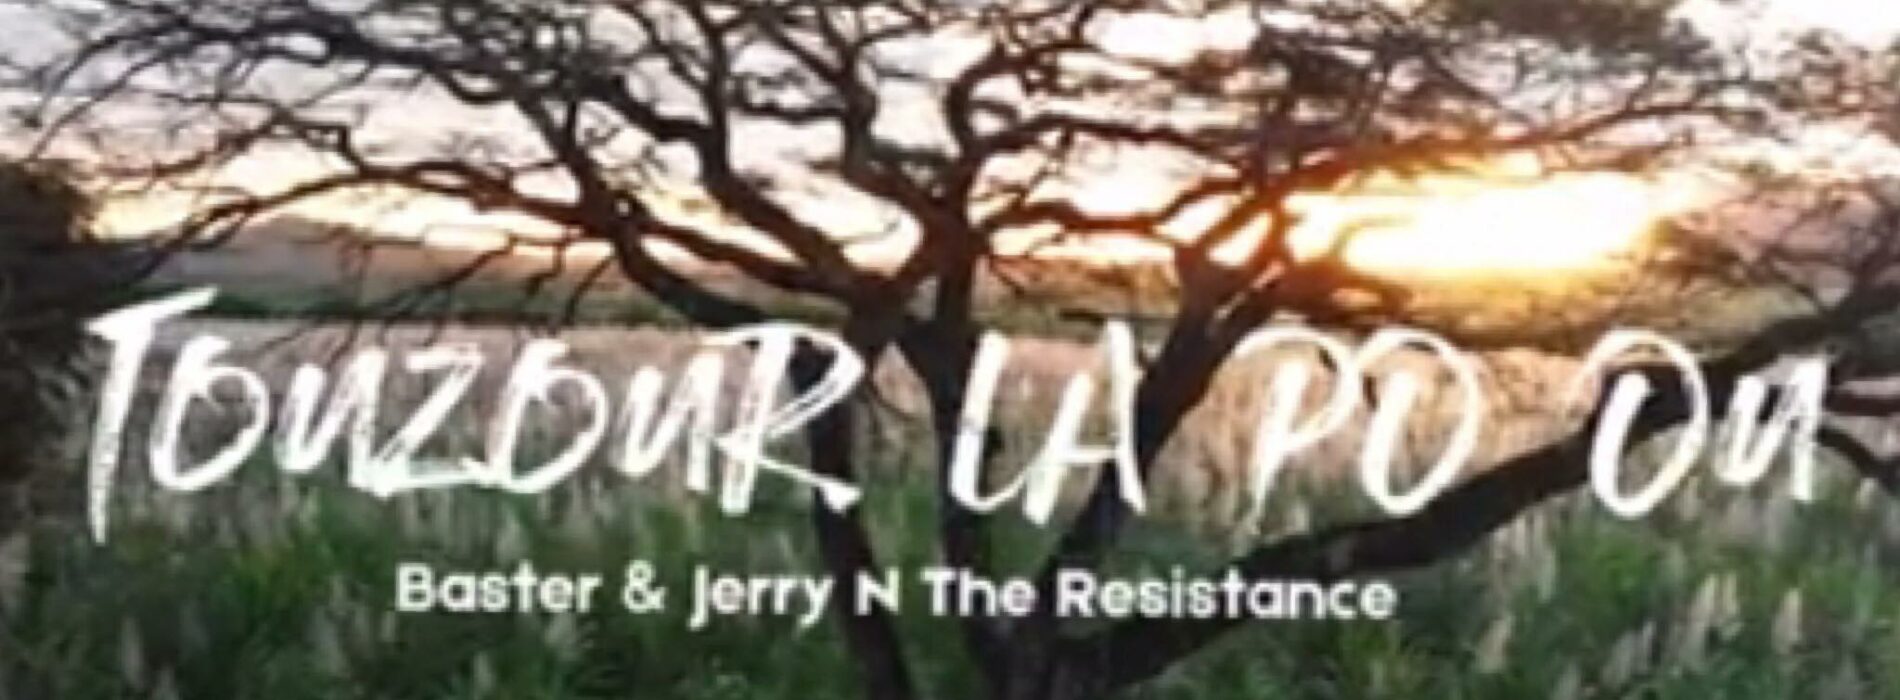 BASTER & JERRY N THE RESISTANCE – « Touzour la pou ou » – Juillet 2021🇷🇪🎶🎵🇲🇺